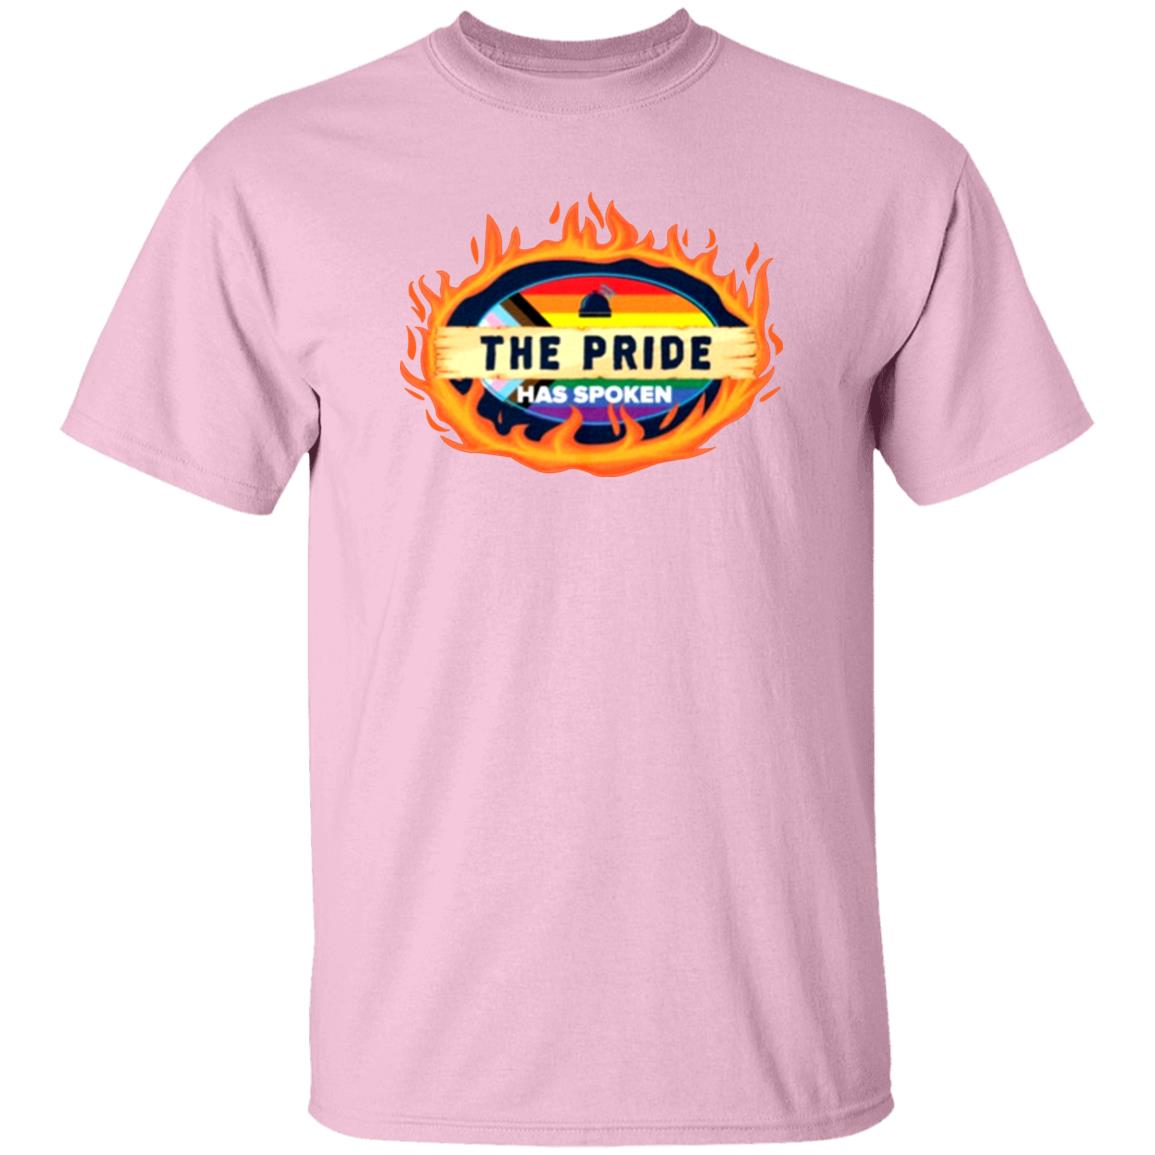 The Pride Has Spoken Shirt Evvie Jagoda Rhap Shop